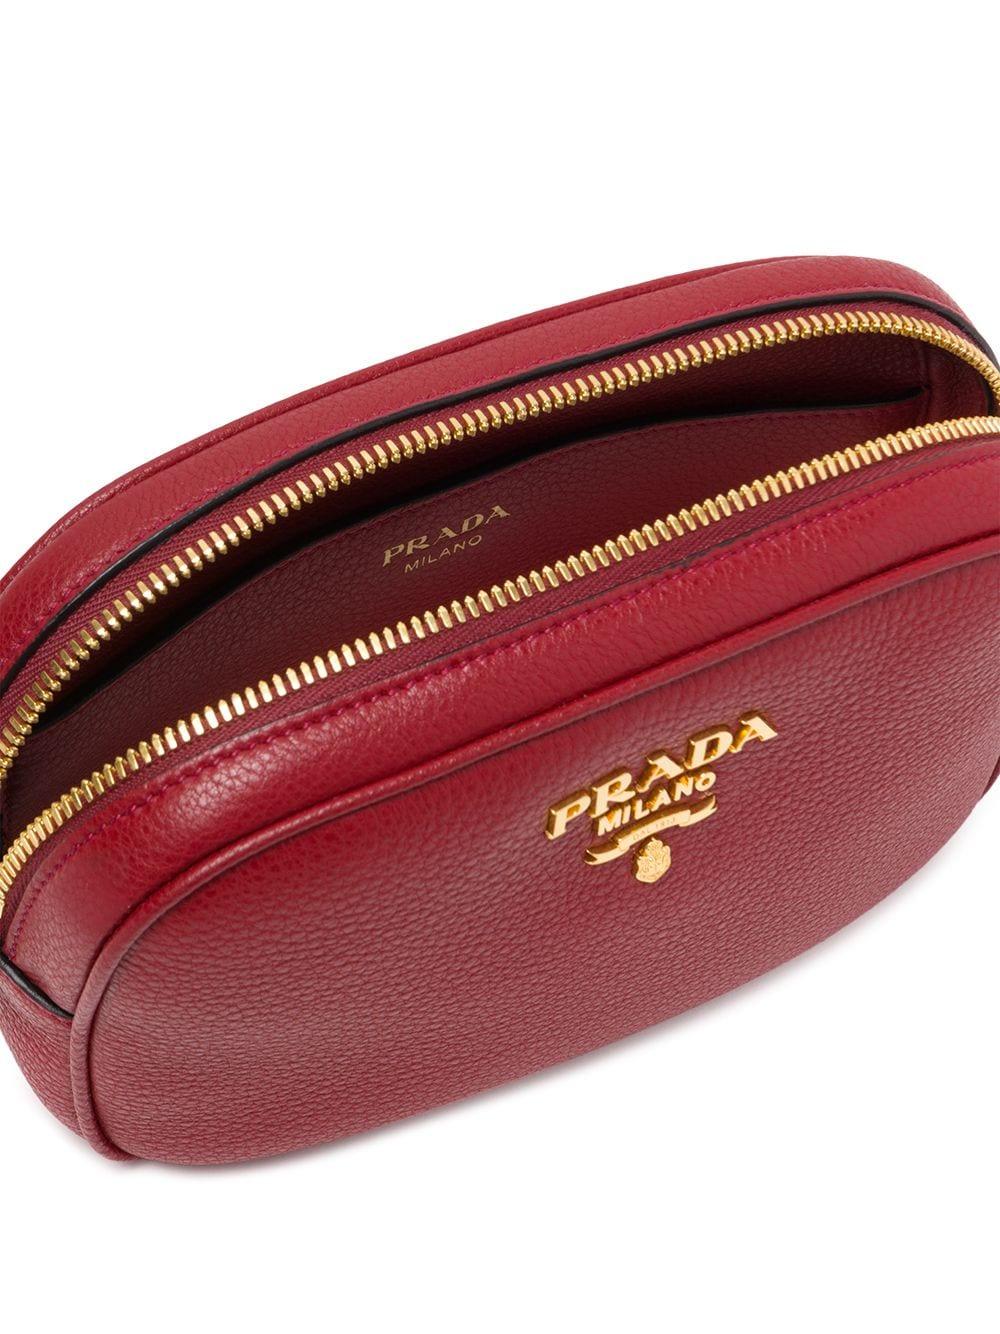 Prada Logo Belt Bag in Red | Lyst